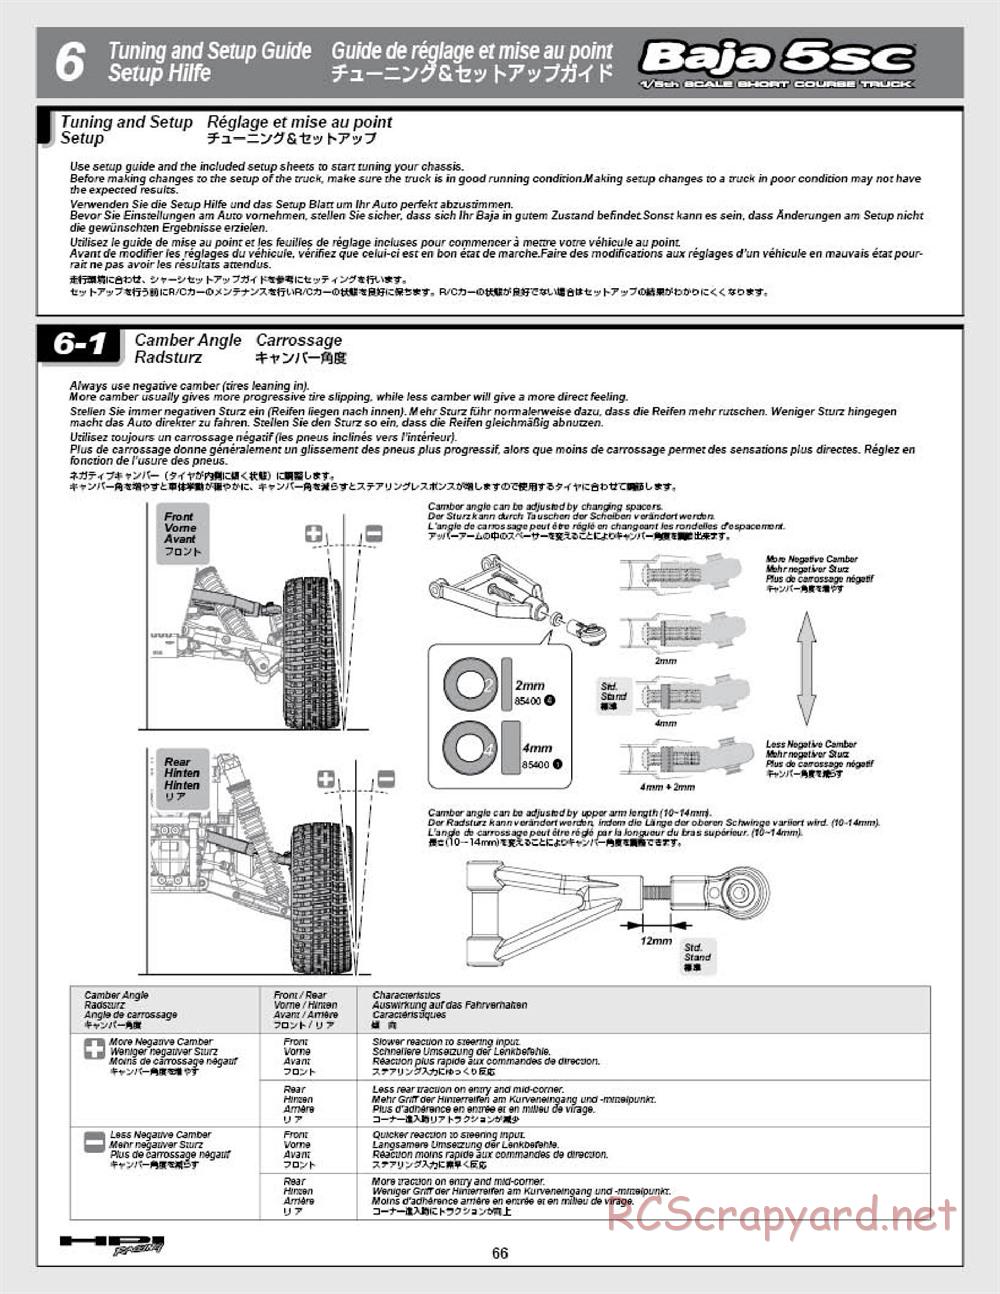 HPI - Baja 5SC - Manual - Page 66